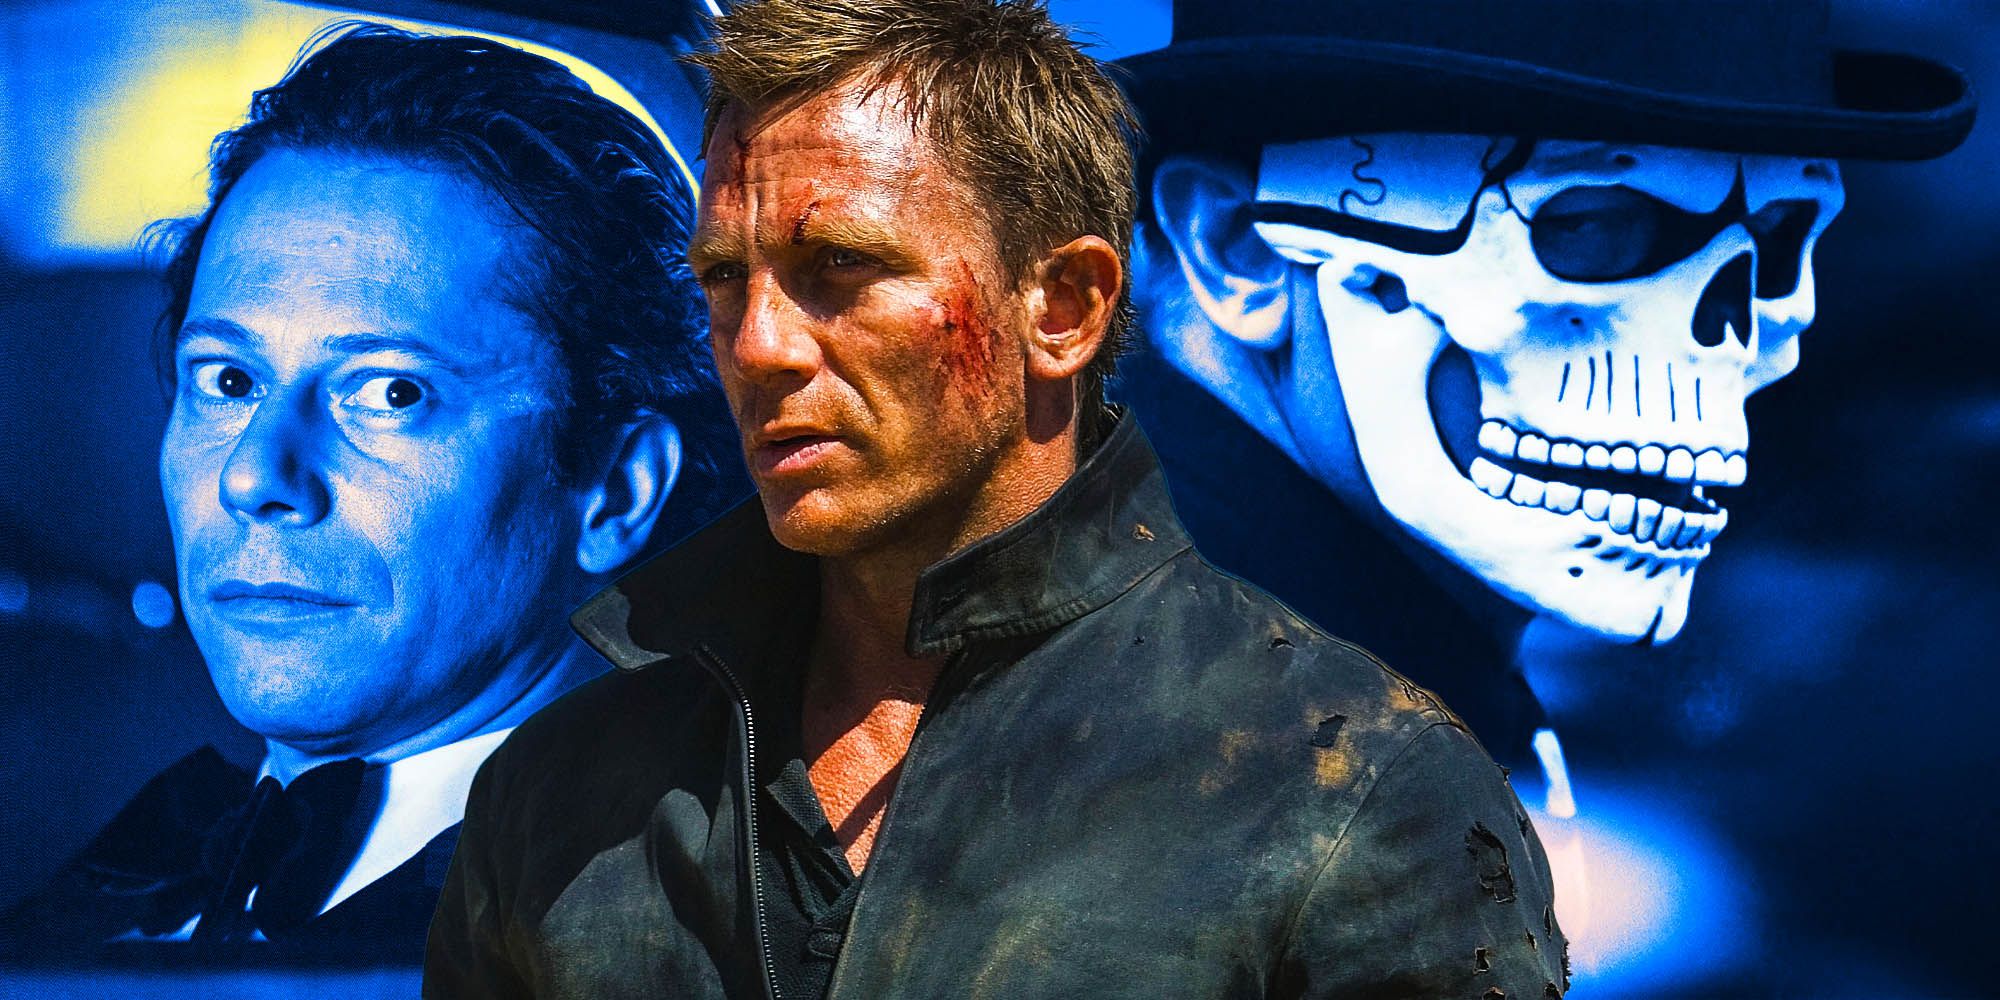 Daniel Craig James bond character rights Quantum of solace Spectre